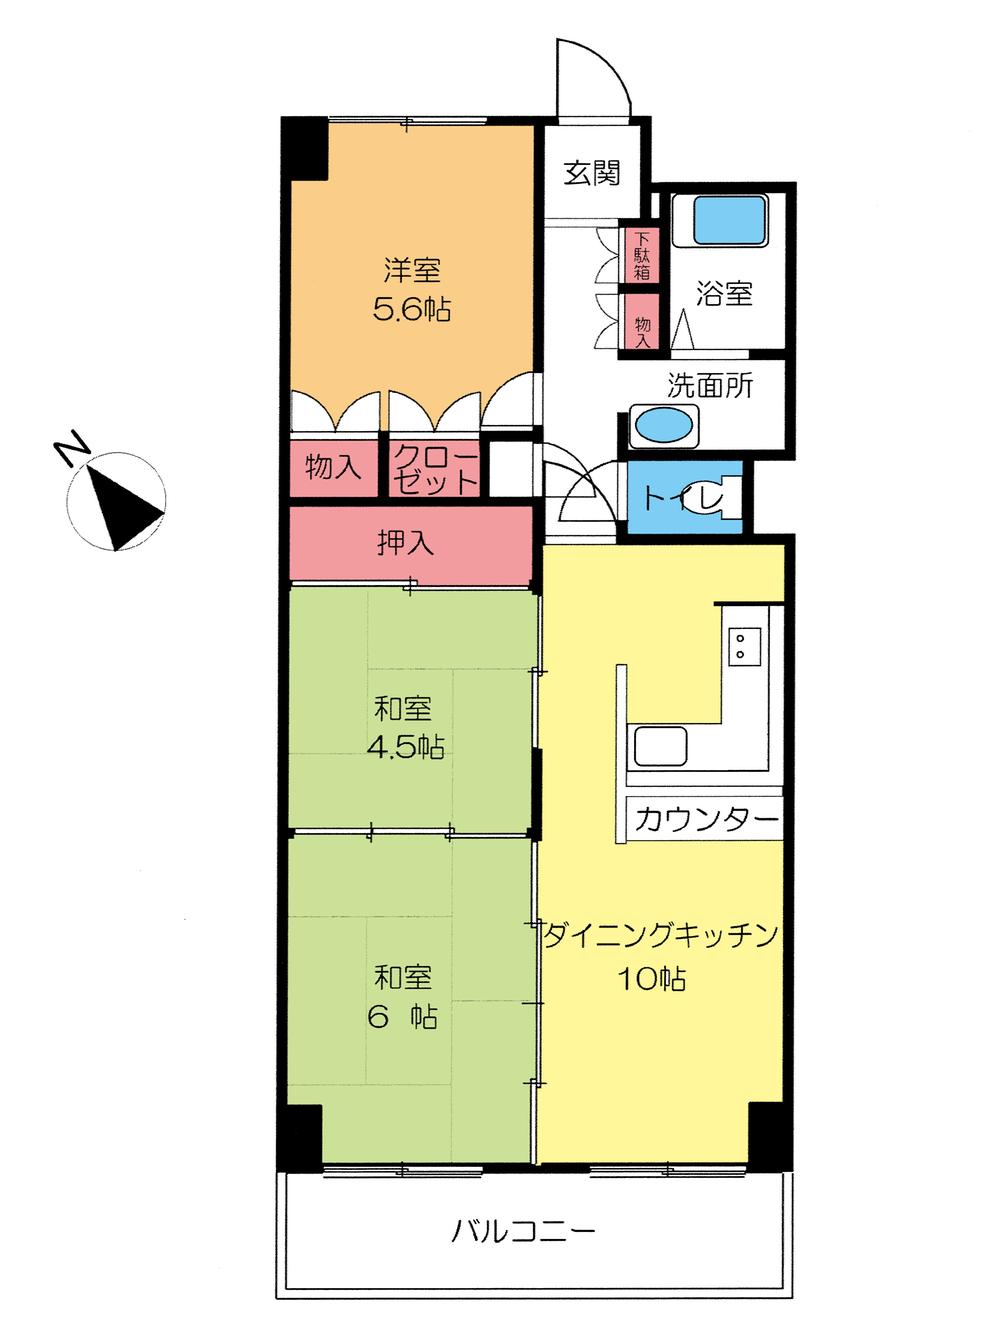 Floor plan. 3DK, Price 10.5 million yen, Occupied area 63.25 sq m floor plan